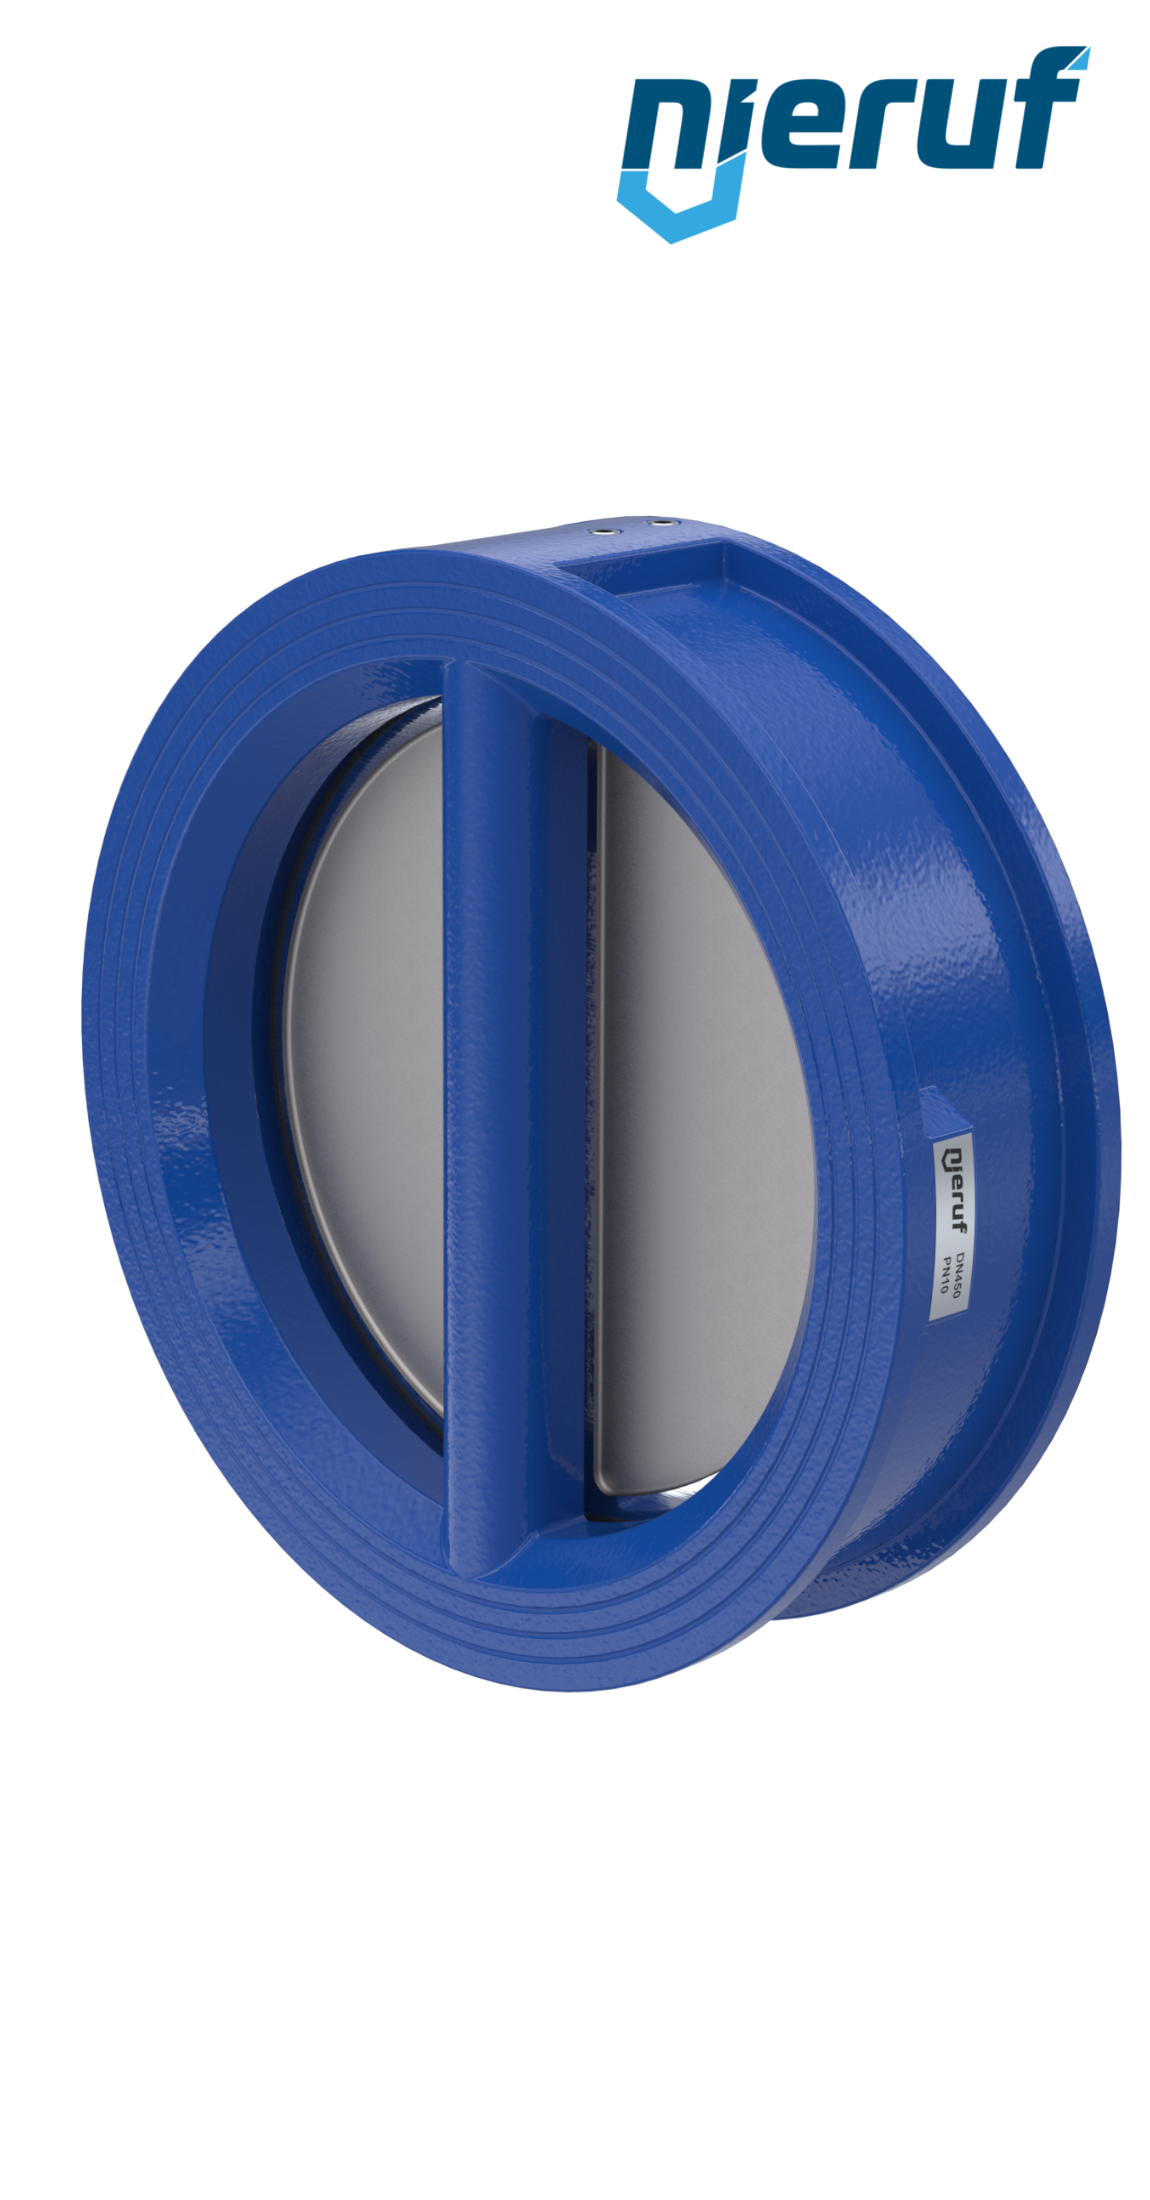 dual plate check valve DN450 DR01 GGG40 epoxyd plated blue 180µm FKM (Viton)